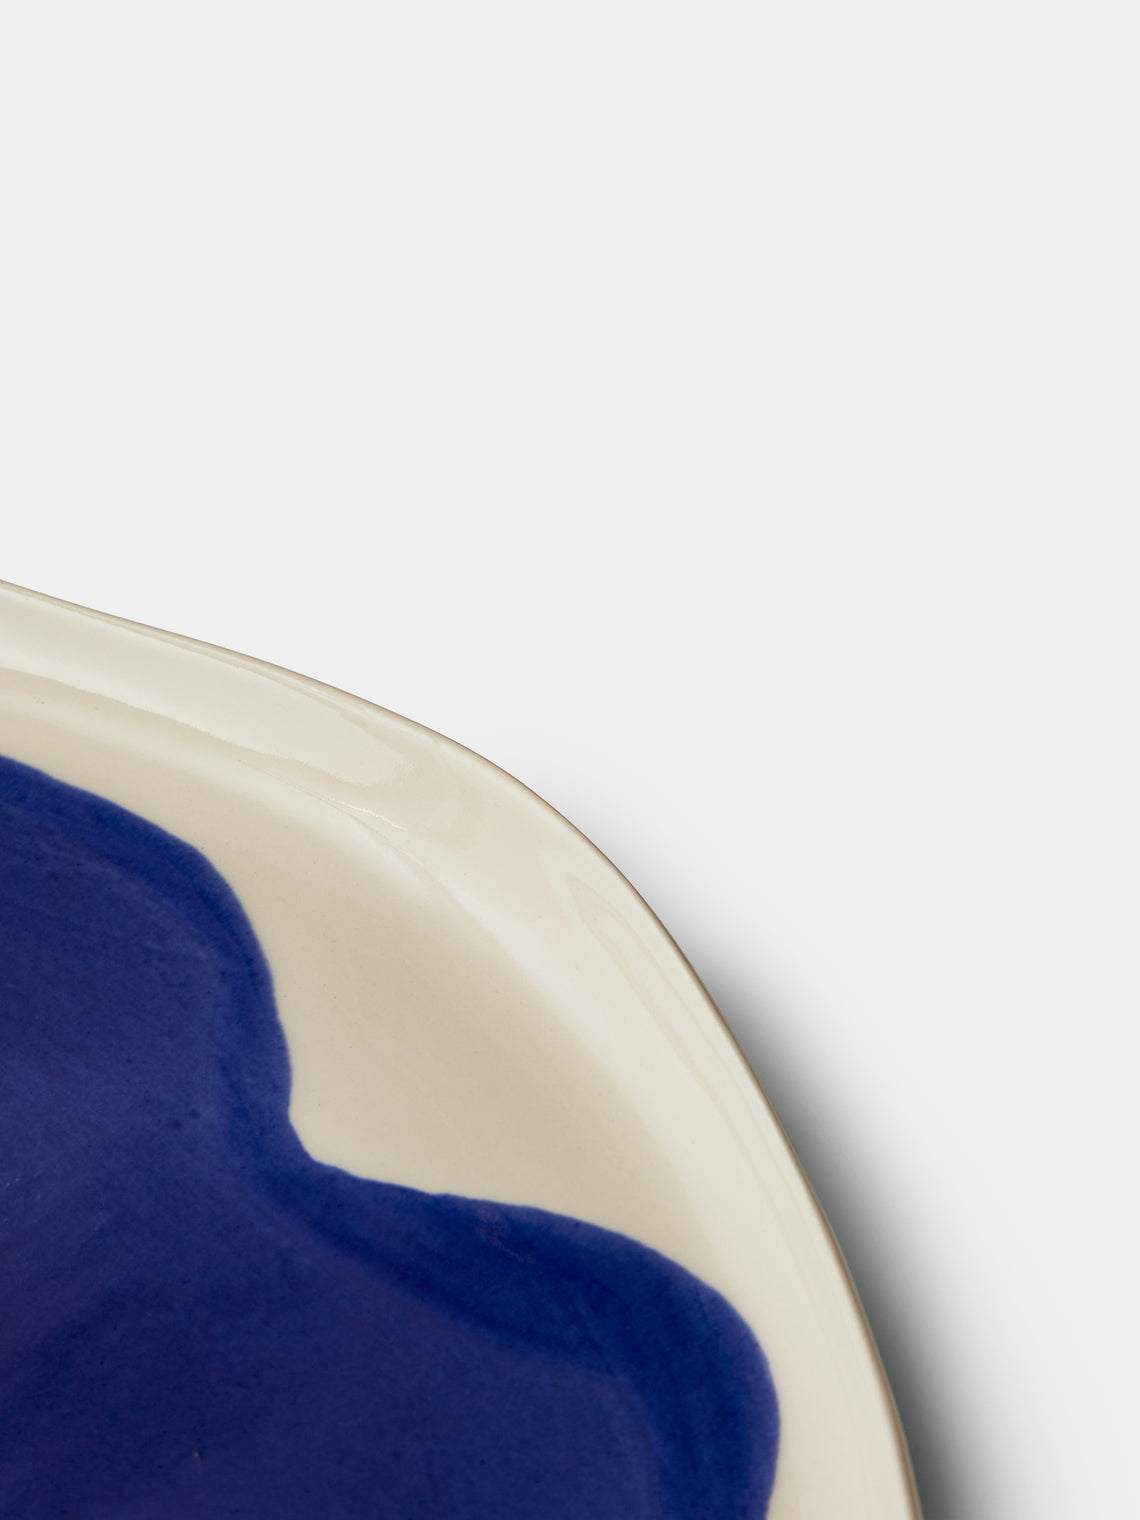 Pottery & Poetry - Hand-Glazed Porcelain Dinner Plates (Set of 4) - Blue - ABASK